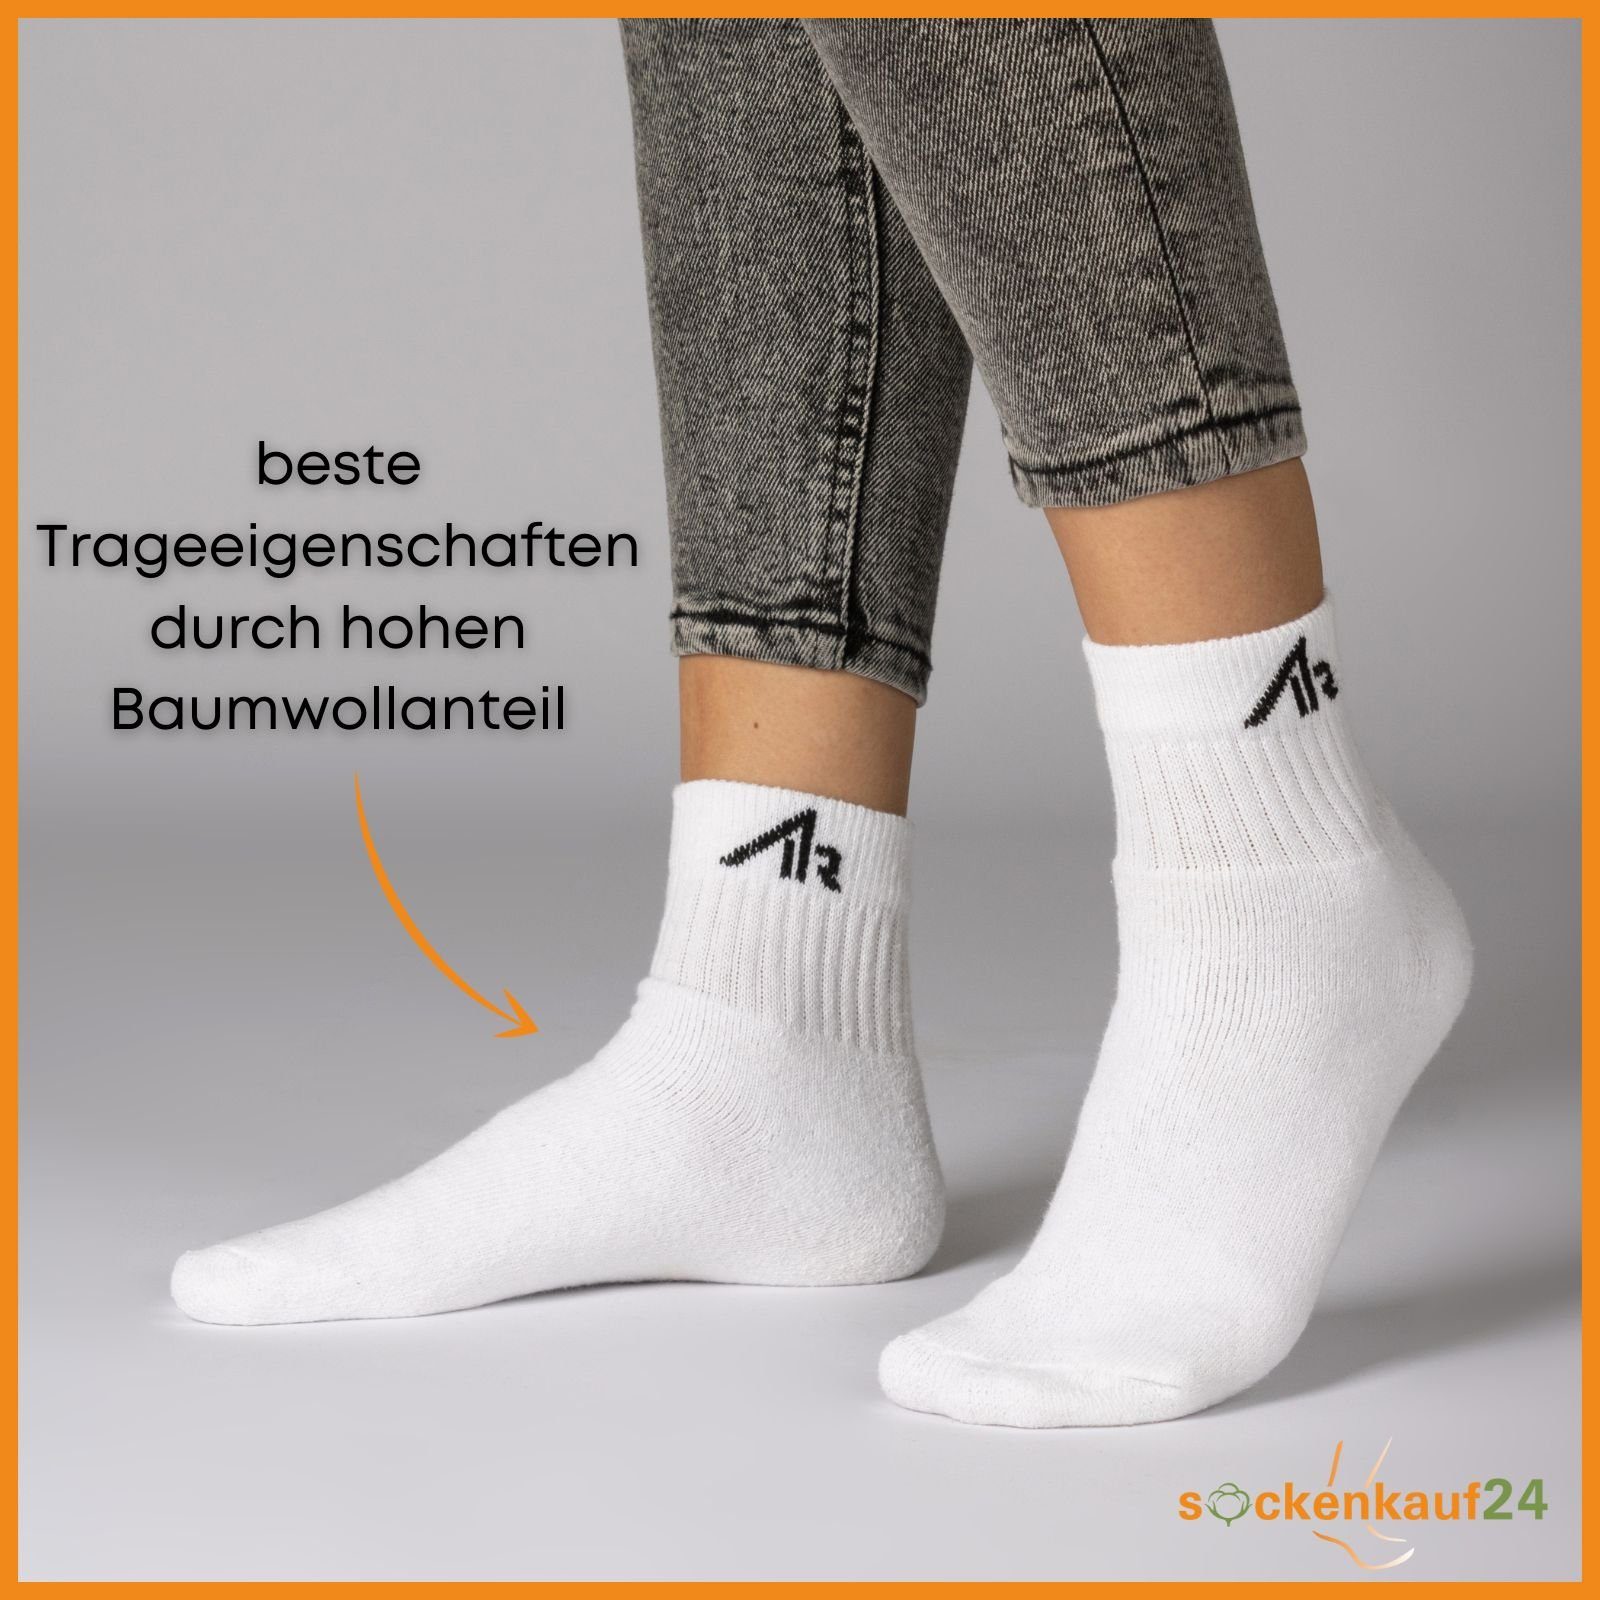 sockenkauf24 Sportsocken 10 Socken Herren - Sport Paar 10301 "i1R" Baumwolle (Weiß, 43-46) Kurzsocken Damen Tennissocken